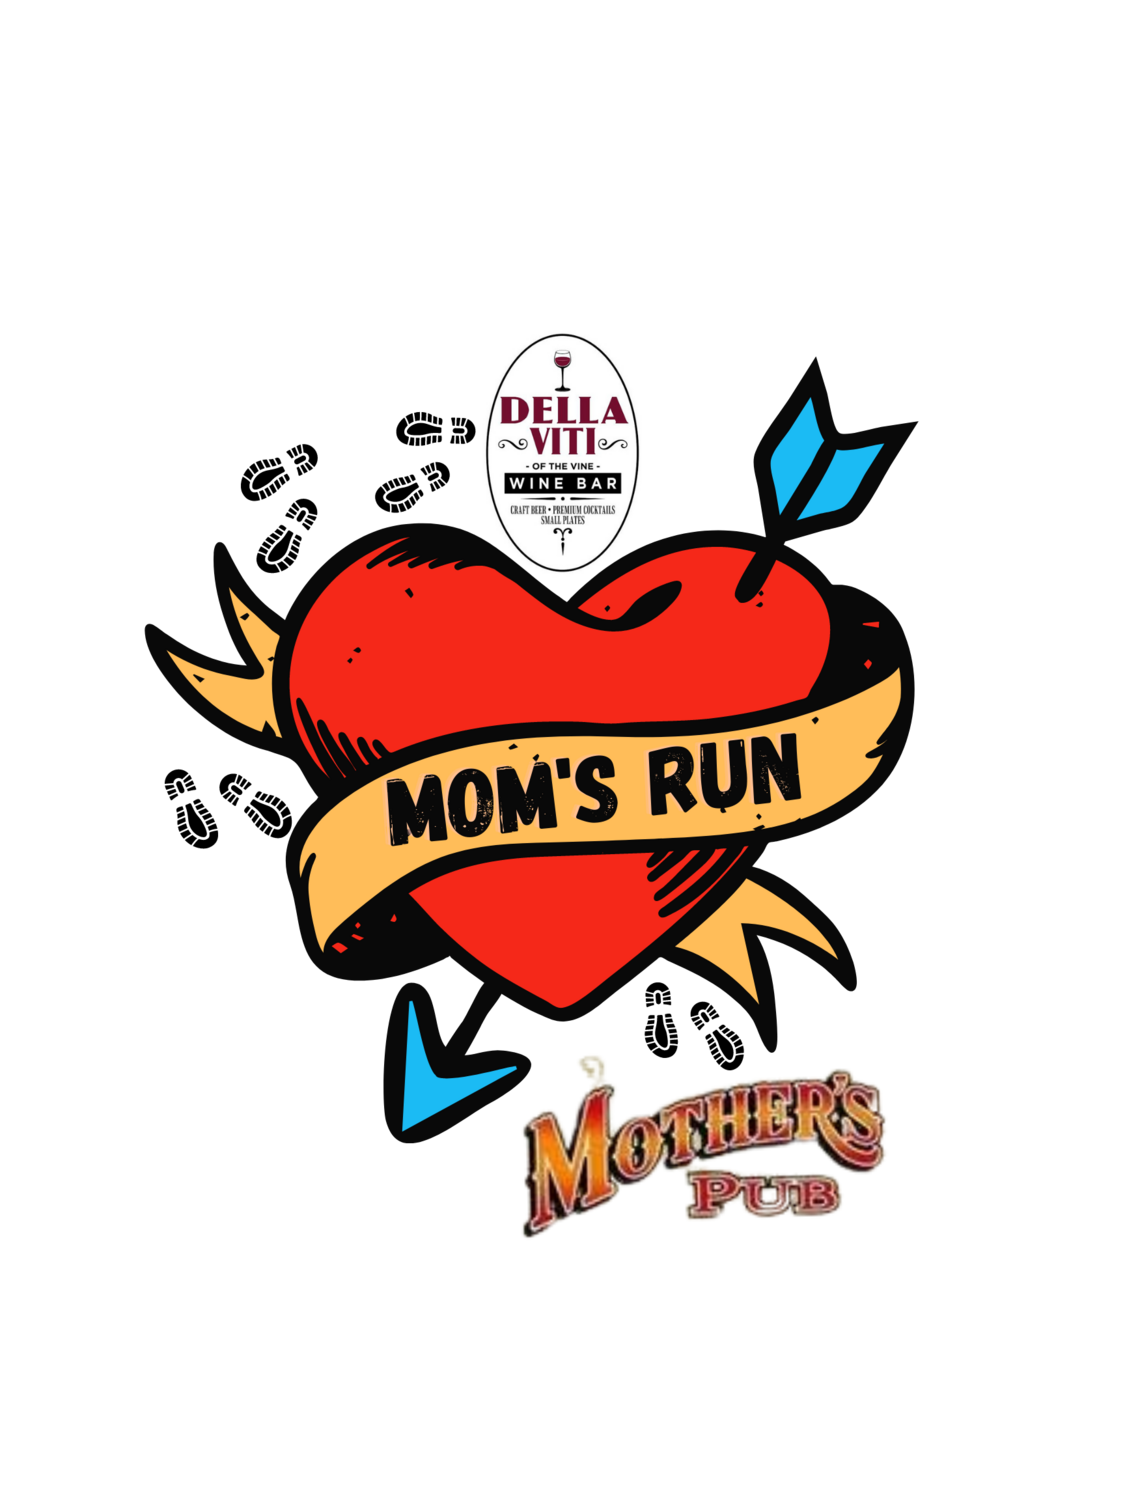 Run for your Momma! Charity 5k Run / Walk Saturday May 20th